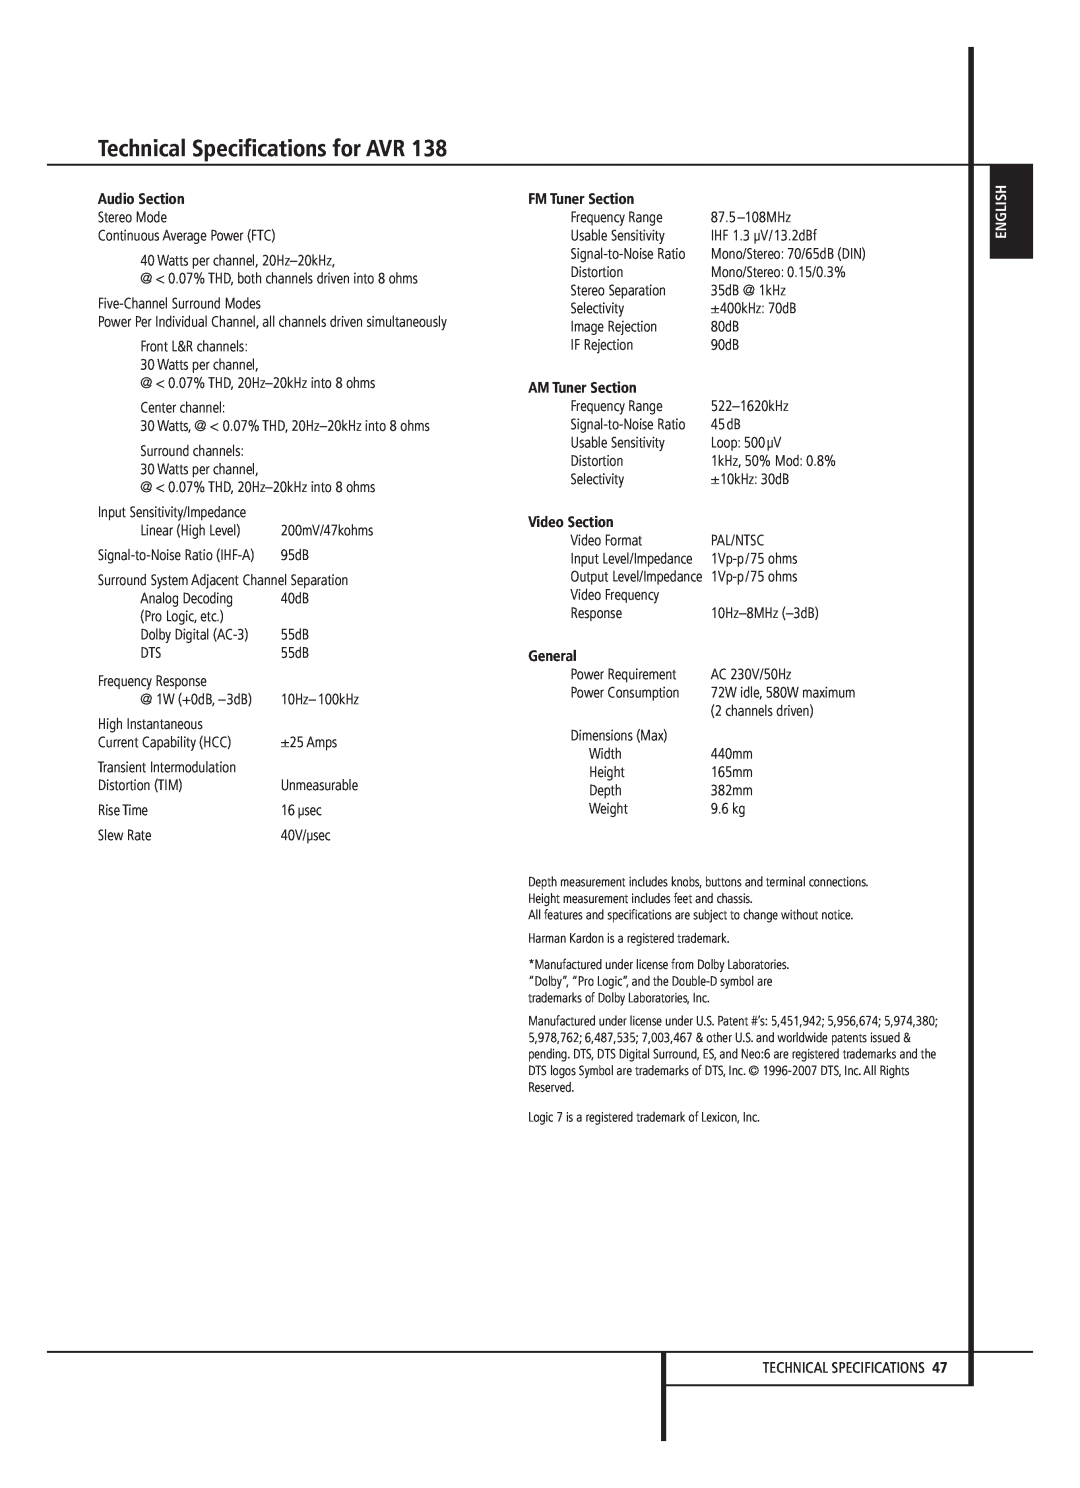 Harman-Kardon 13828 Technical Specifications for AVR, Audio Section, FM Tuner Section, AM Tuner Section, Video Section 